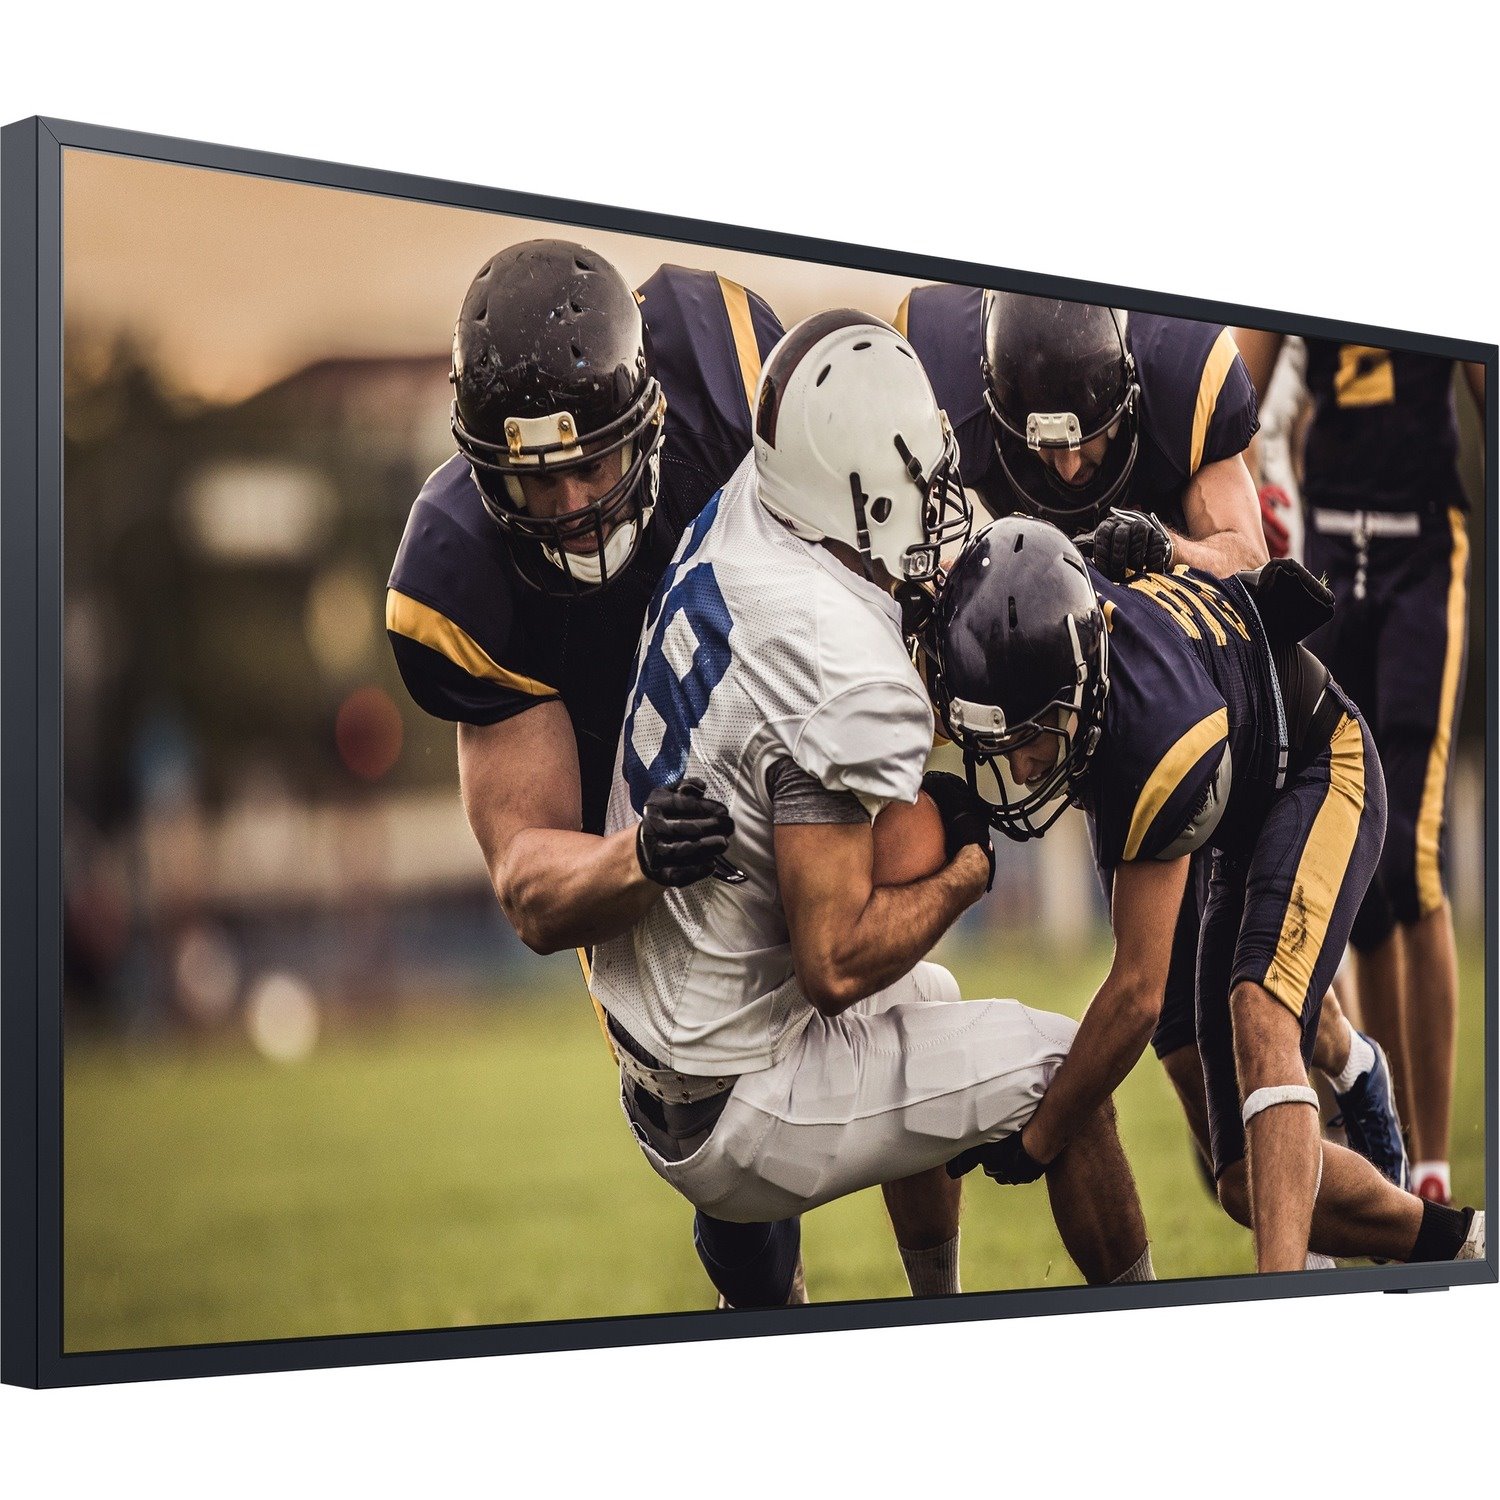 Samsung LH55BHTELGP 139.7 cm Smart LED-LCD TV - 4K UHDTV - Titan Black